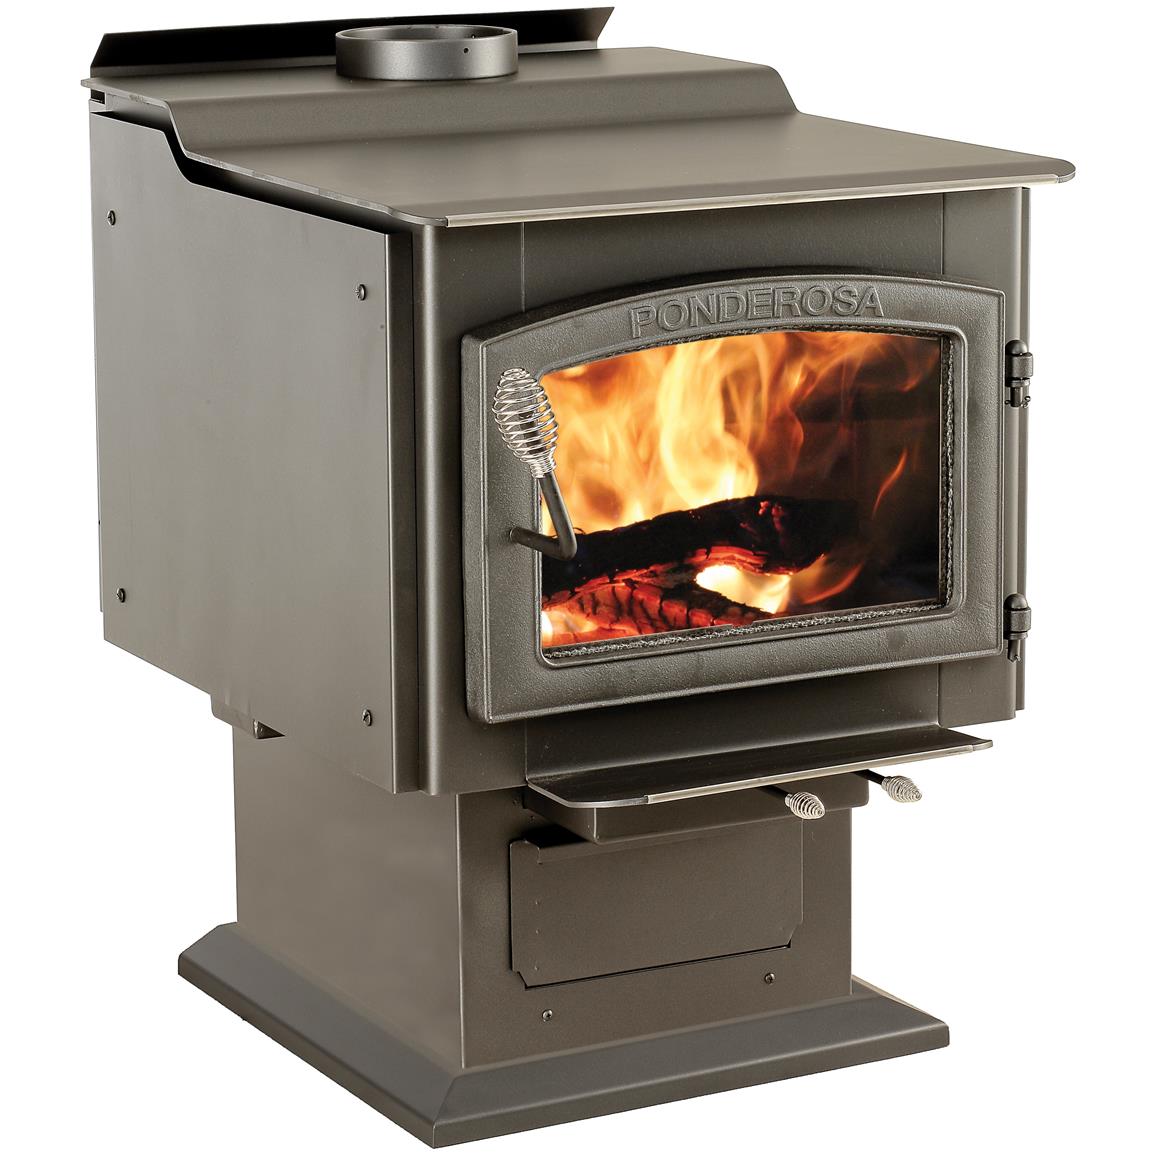 vogelzang-ponderosa-epa-wood-stove-588722-wood-pellet-stoves-at